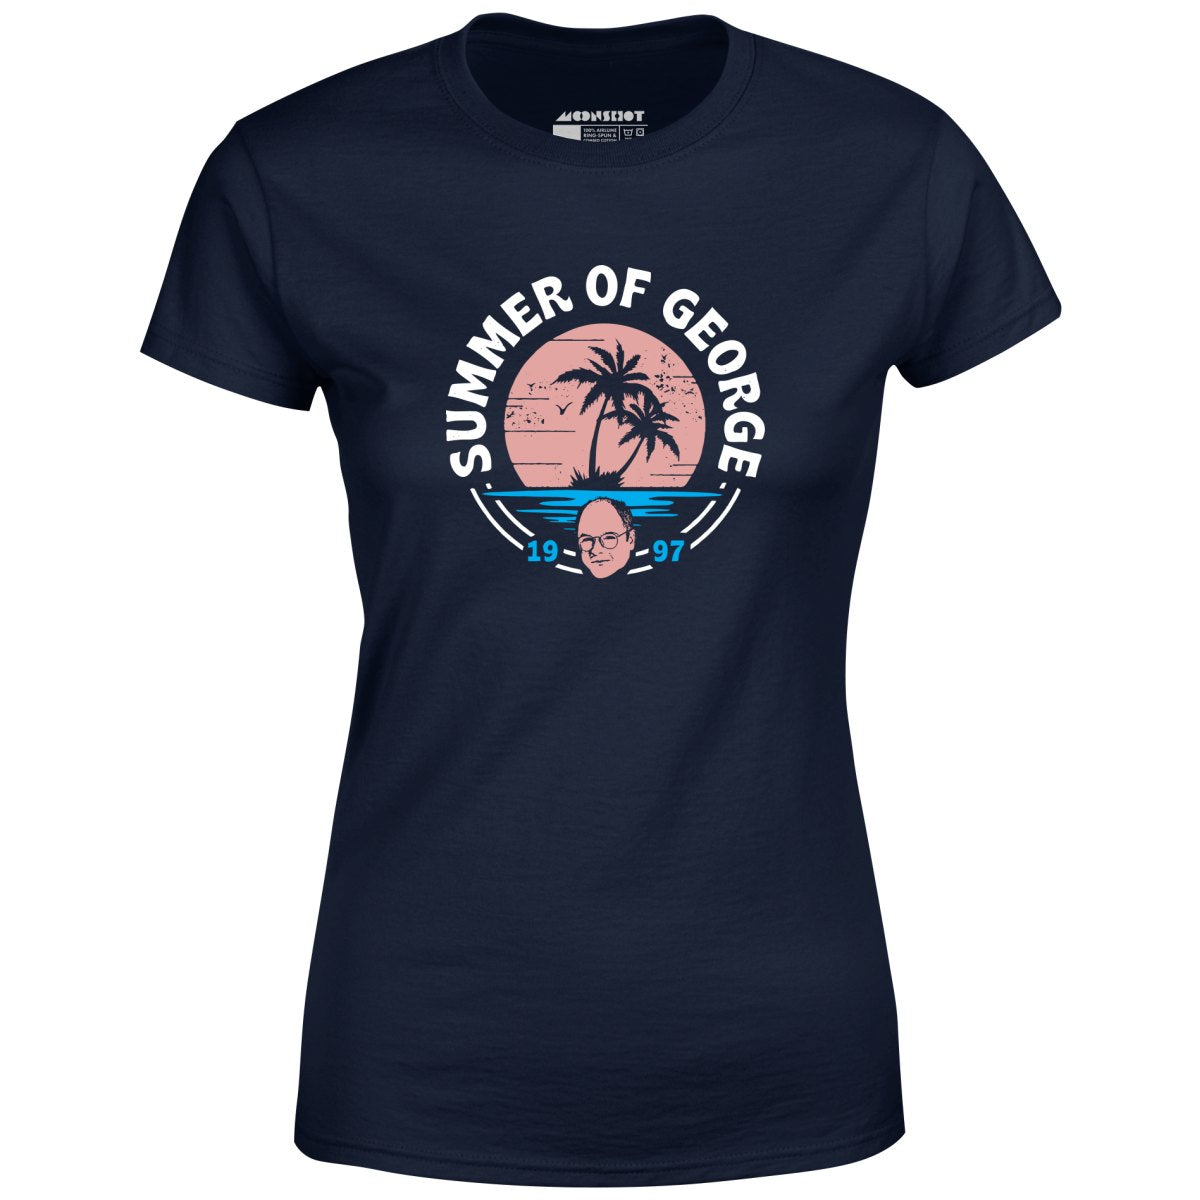 Summer of George 1997 - Women's T-Shirt